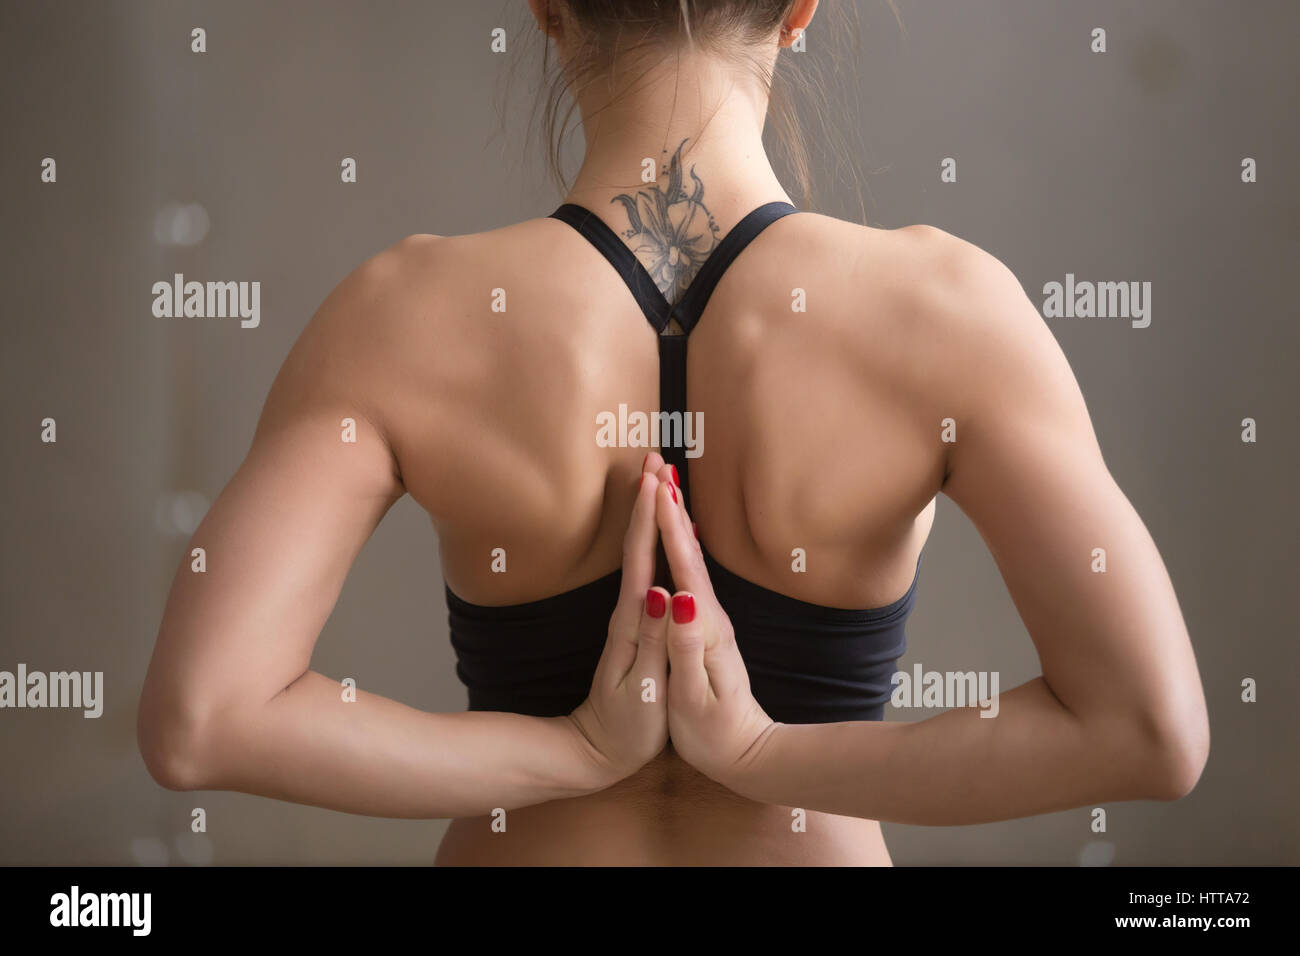 Junge attraktive Frau macht Namaste hinter den Rücken, graue stud Stockfoto